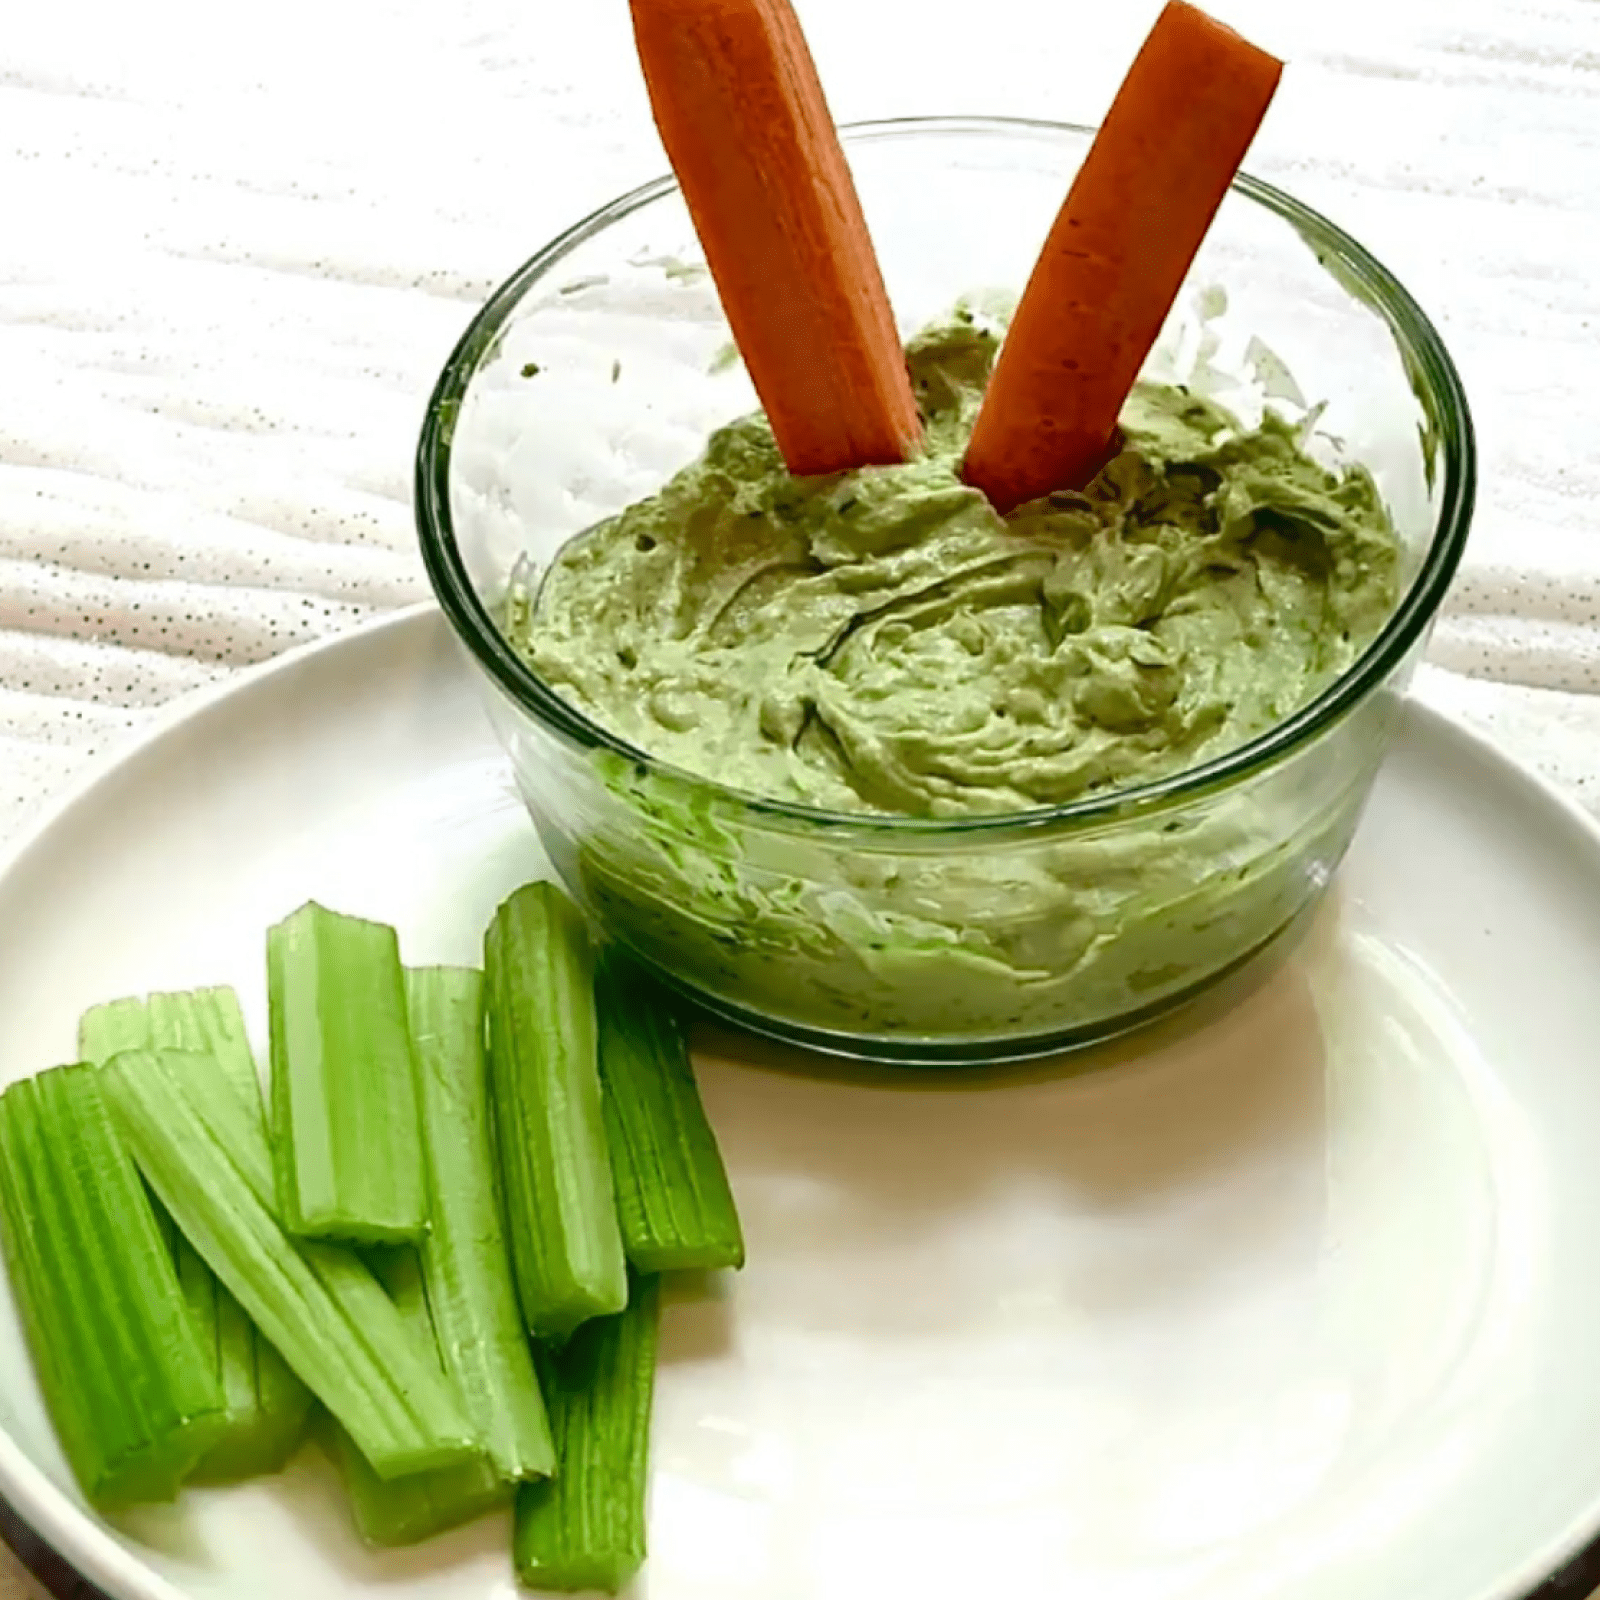 Green Goddess Dip with Sliced Veggies